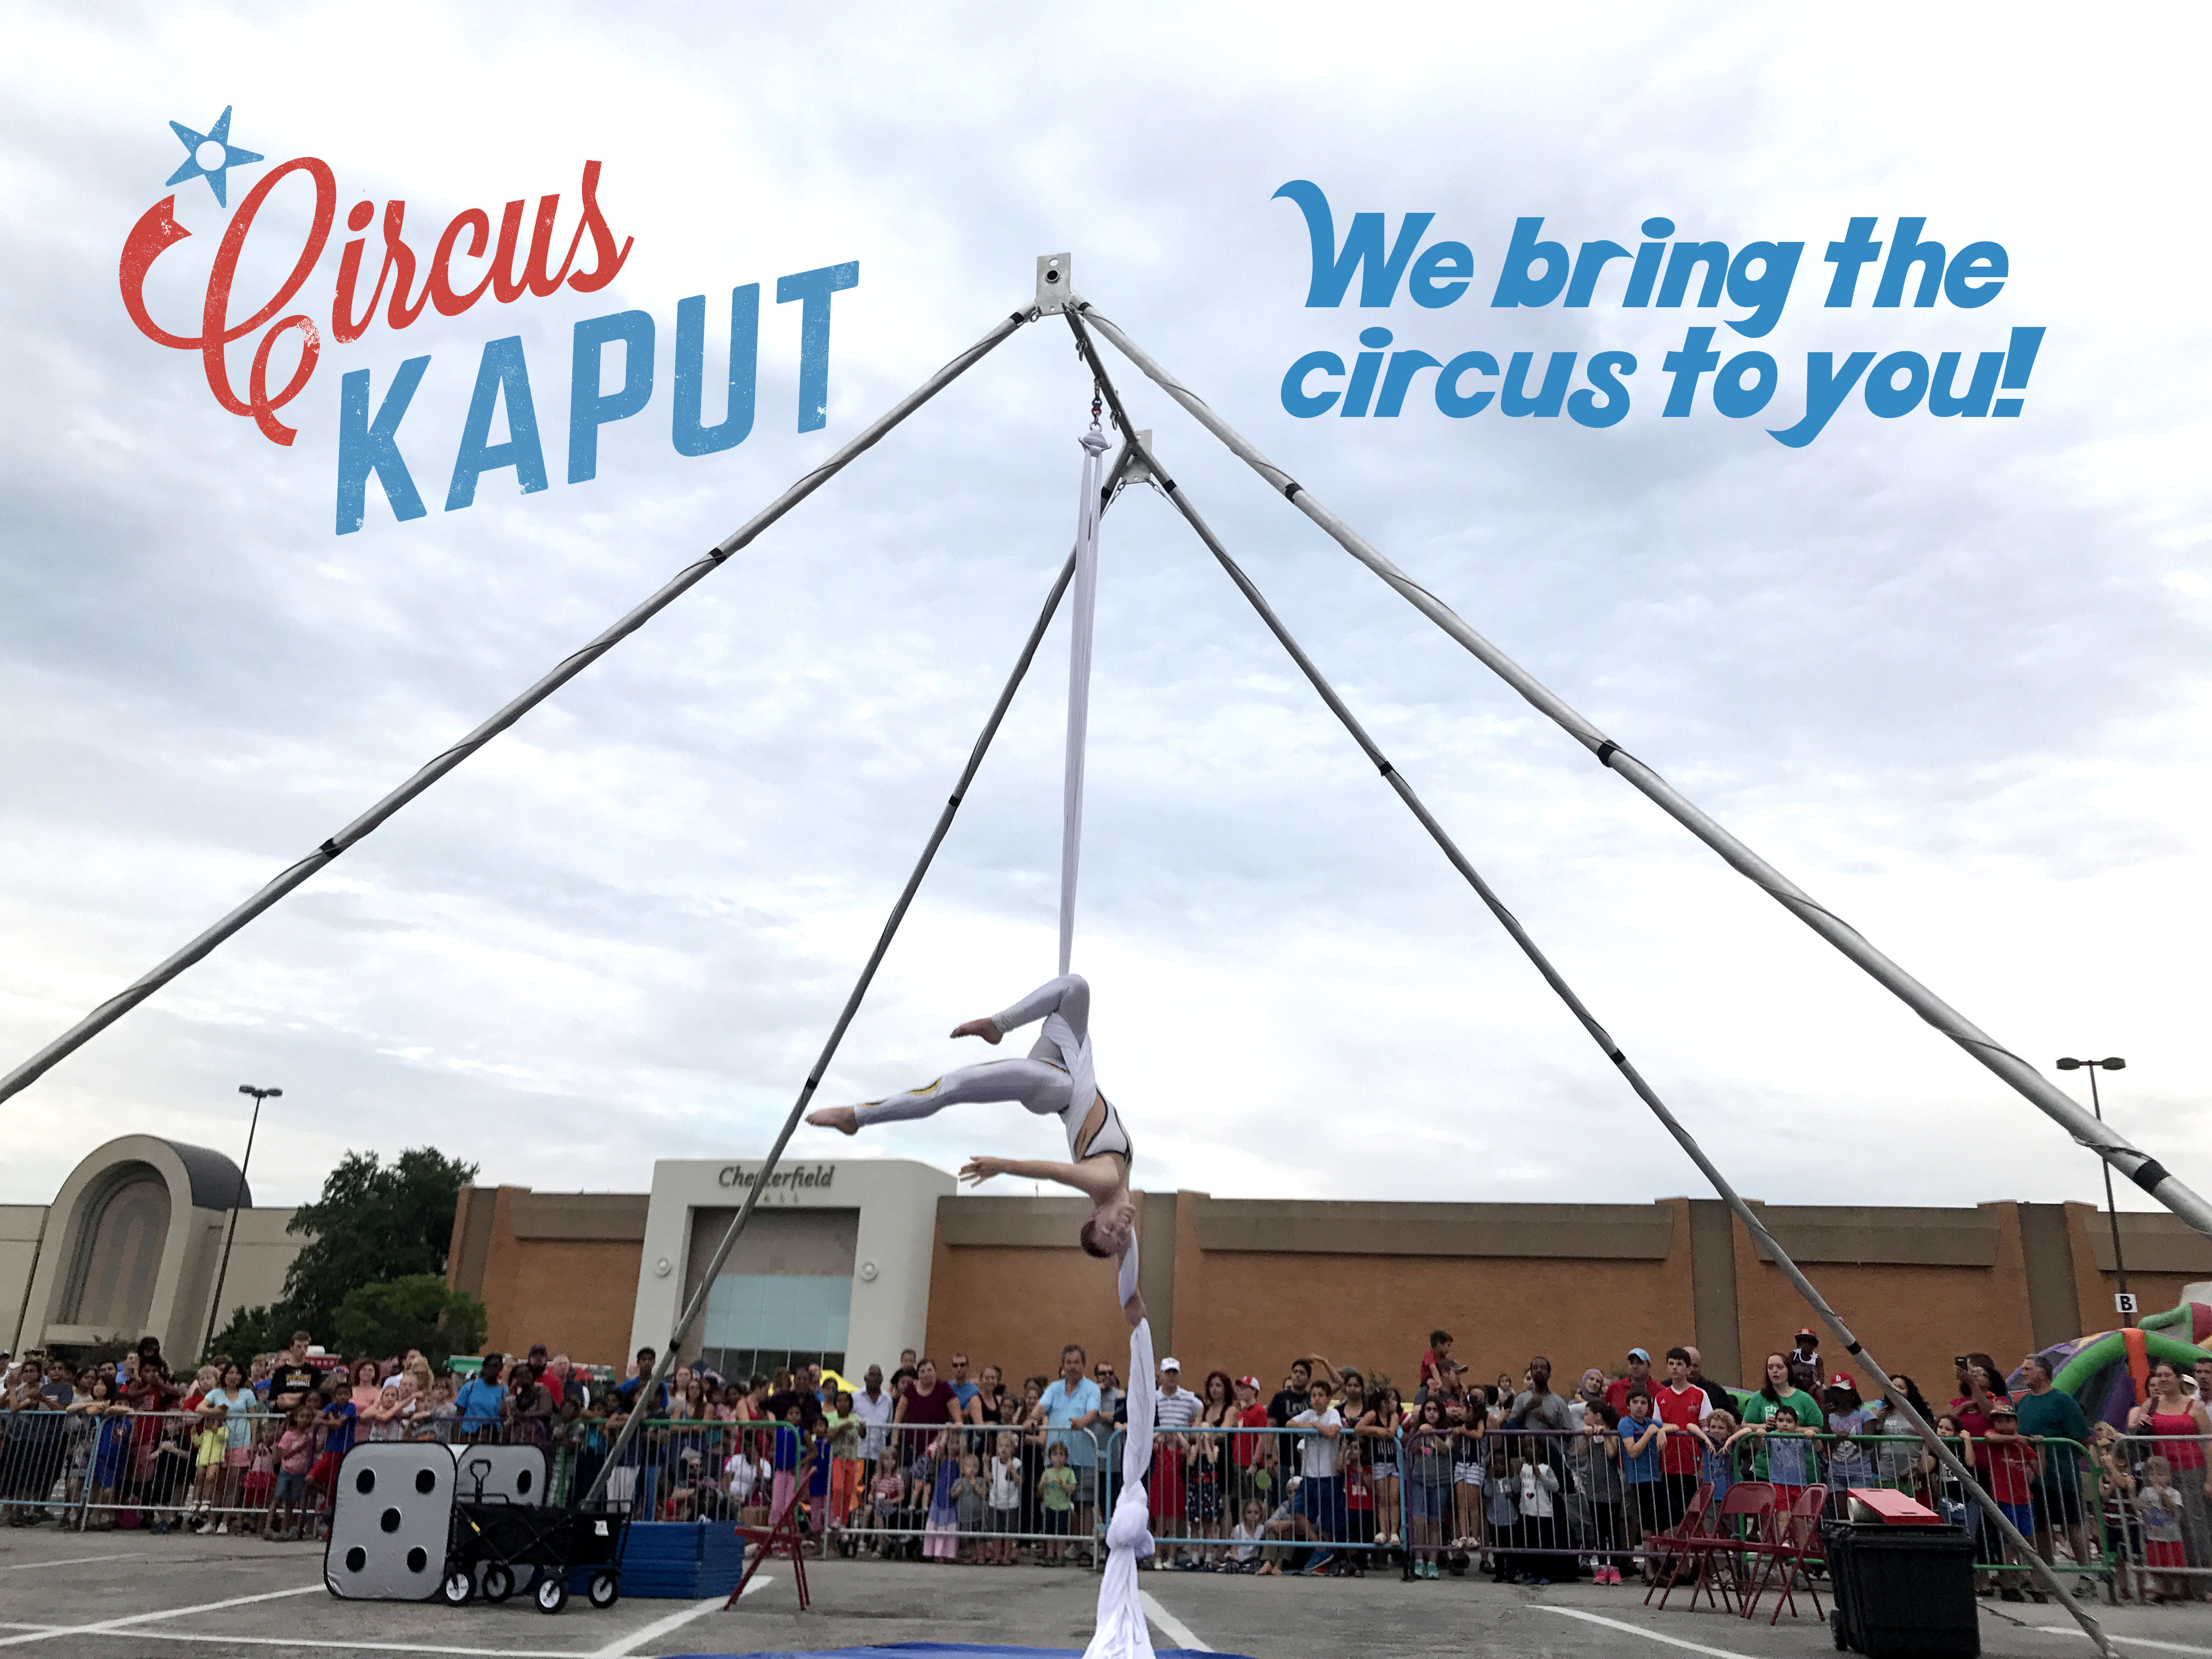 aerial silks event entertainer circus kaput